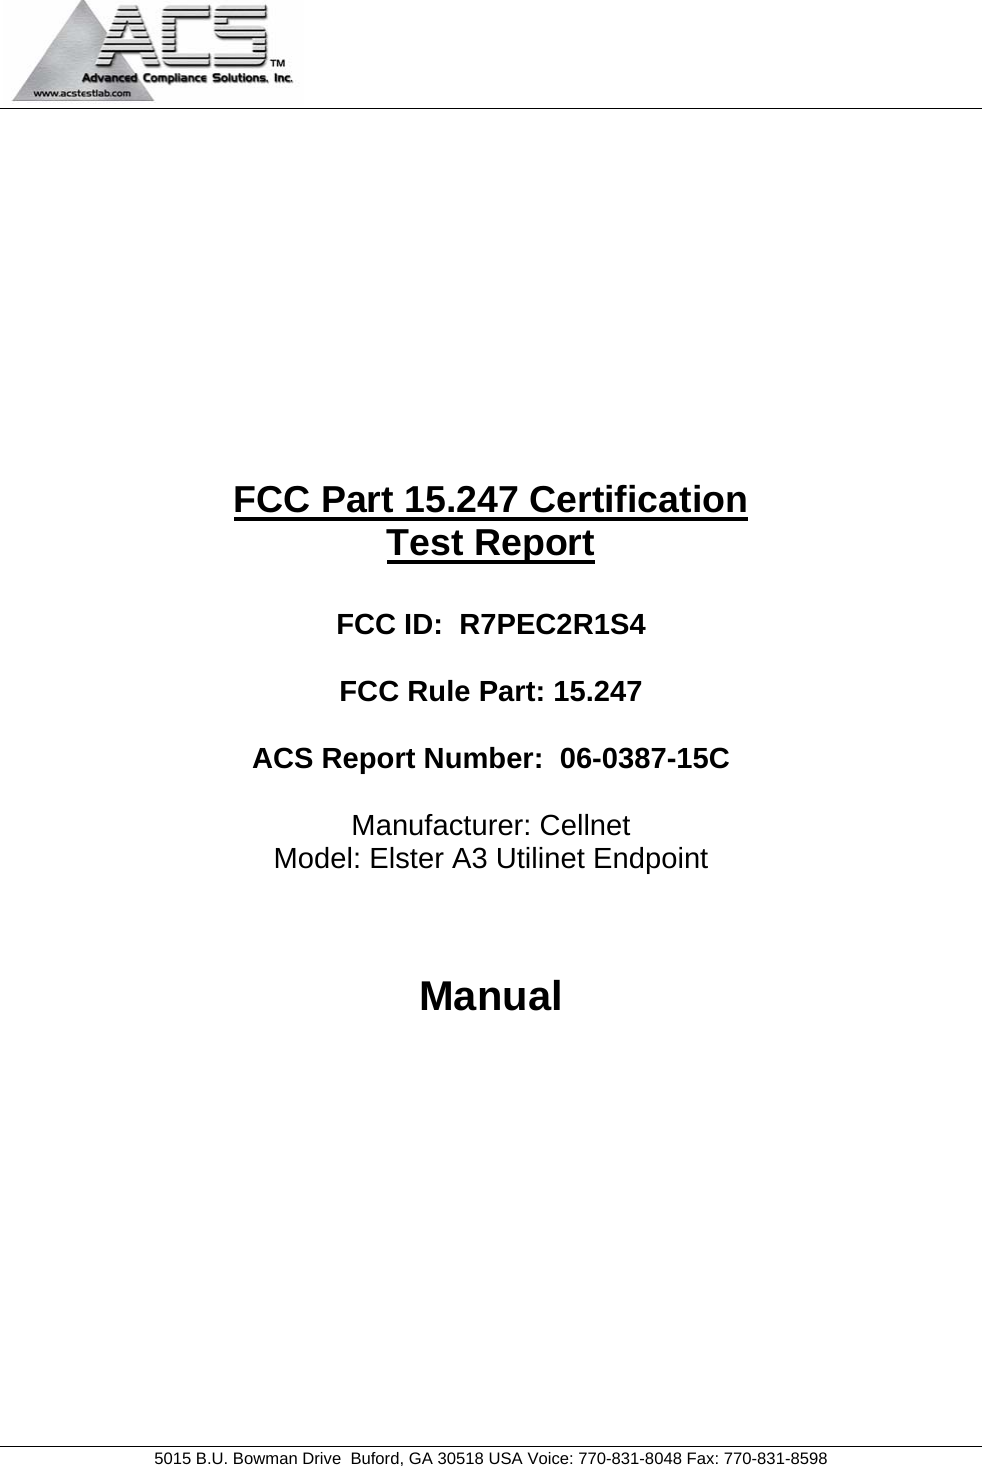   5015 B.U. Bowman Drive  Buford, GA 30518 USA Voice: 770-831-8048 Fax: 770-831-8598           FCC Part 15.247 Certification Test Report  FCC ID:  R7PEC2R1S4  FCC Rule Part: 15.247  ACS Report Number:  06-0387-15C   Manufacturer: Cellnet Model: Elster A3 Utilinet Endpoint   Manual         